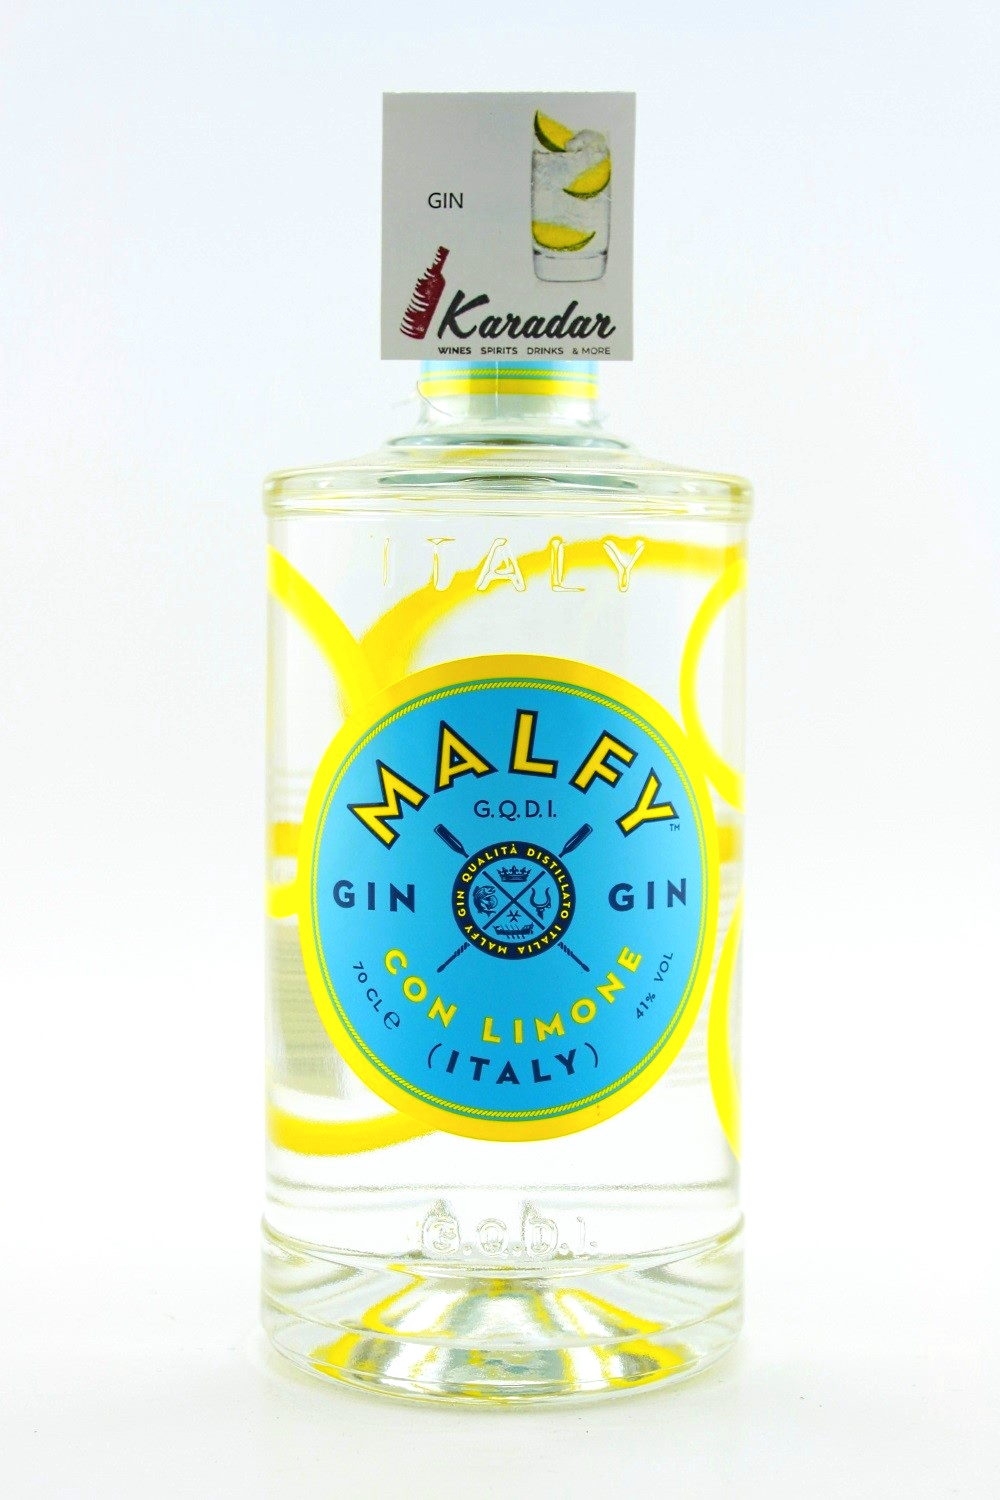 whit vol. Malfy 41% Lemon Italian Gin Gin